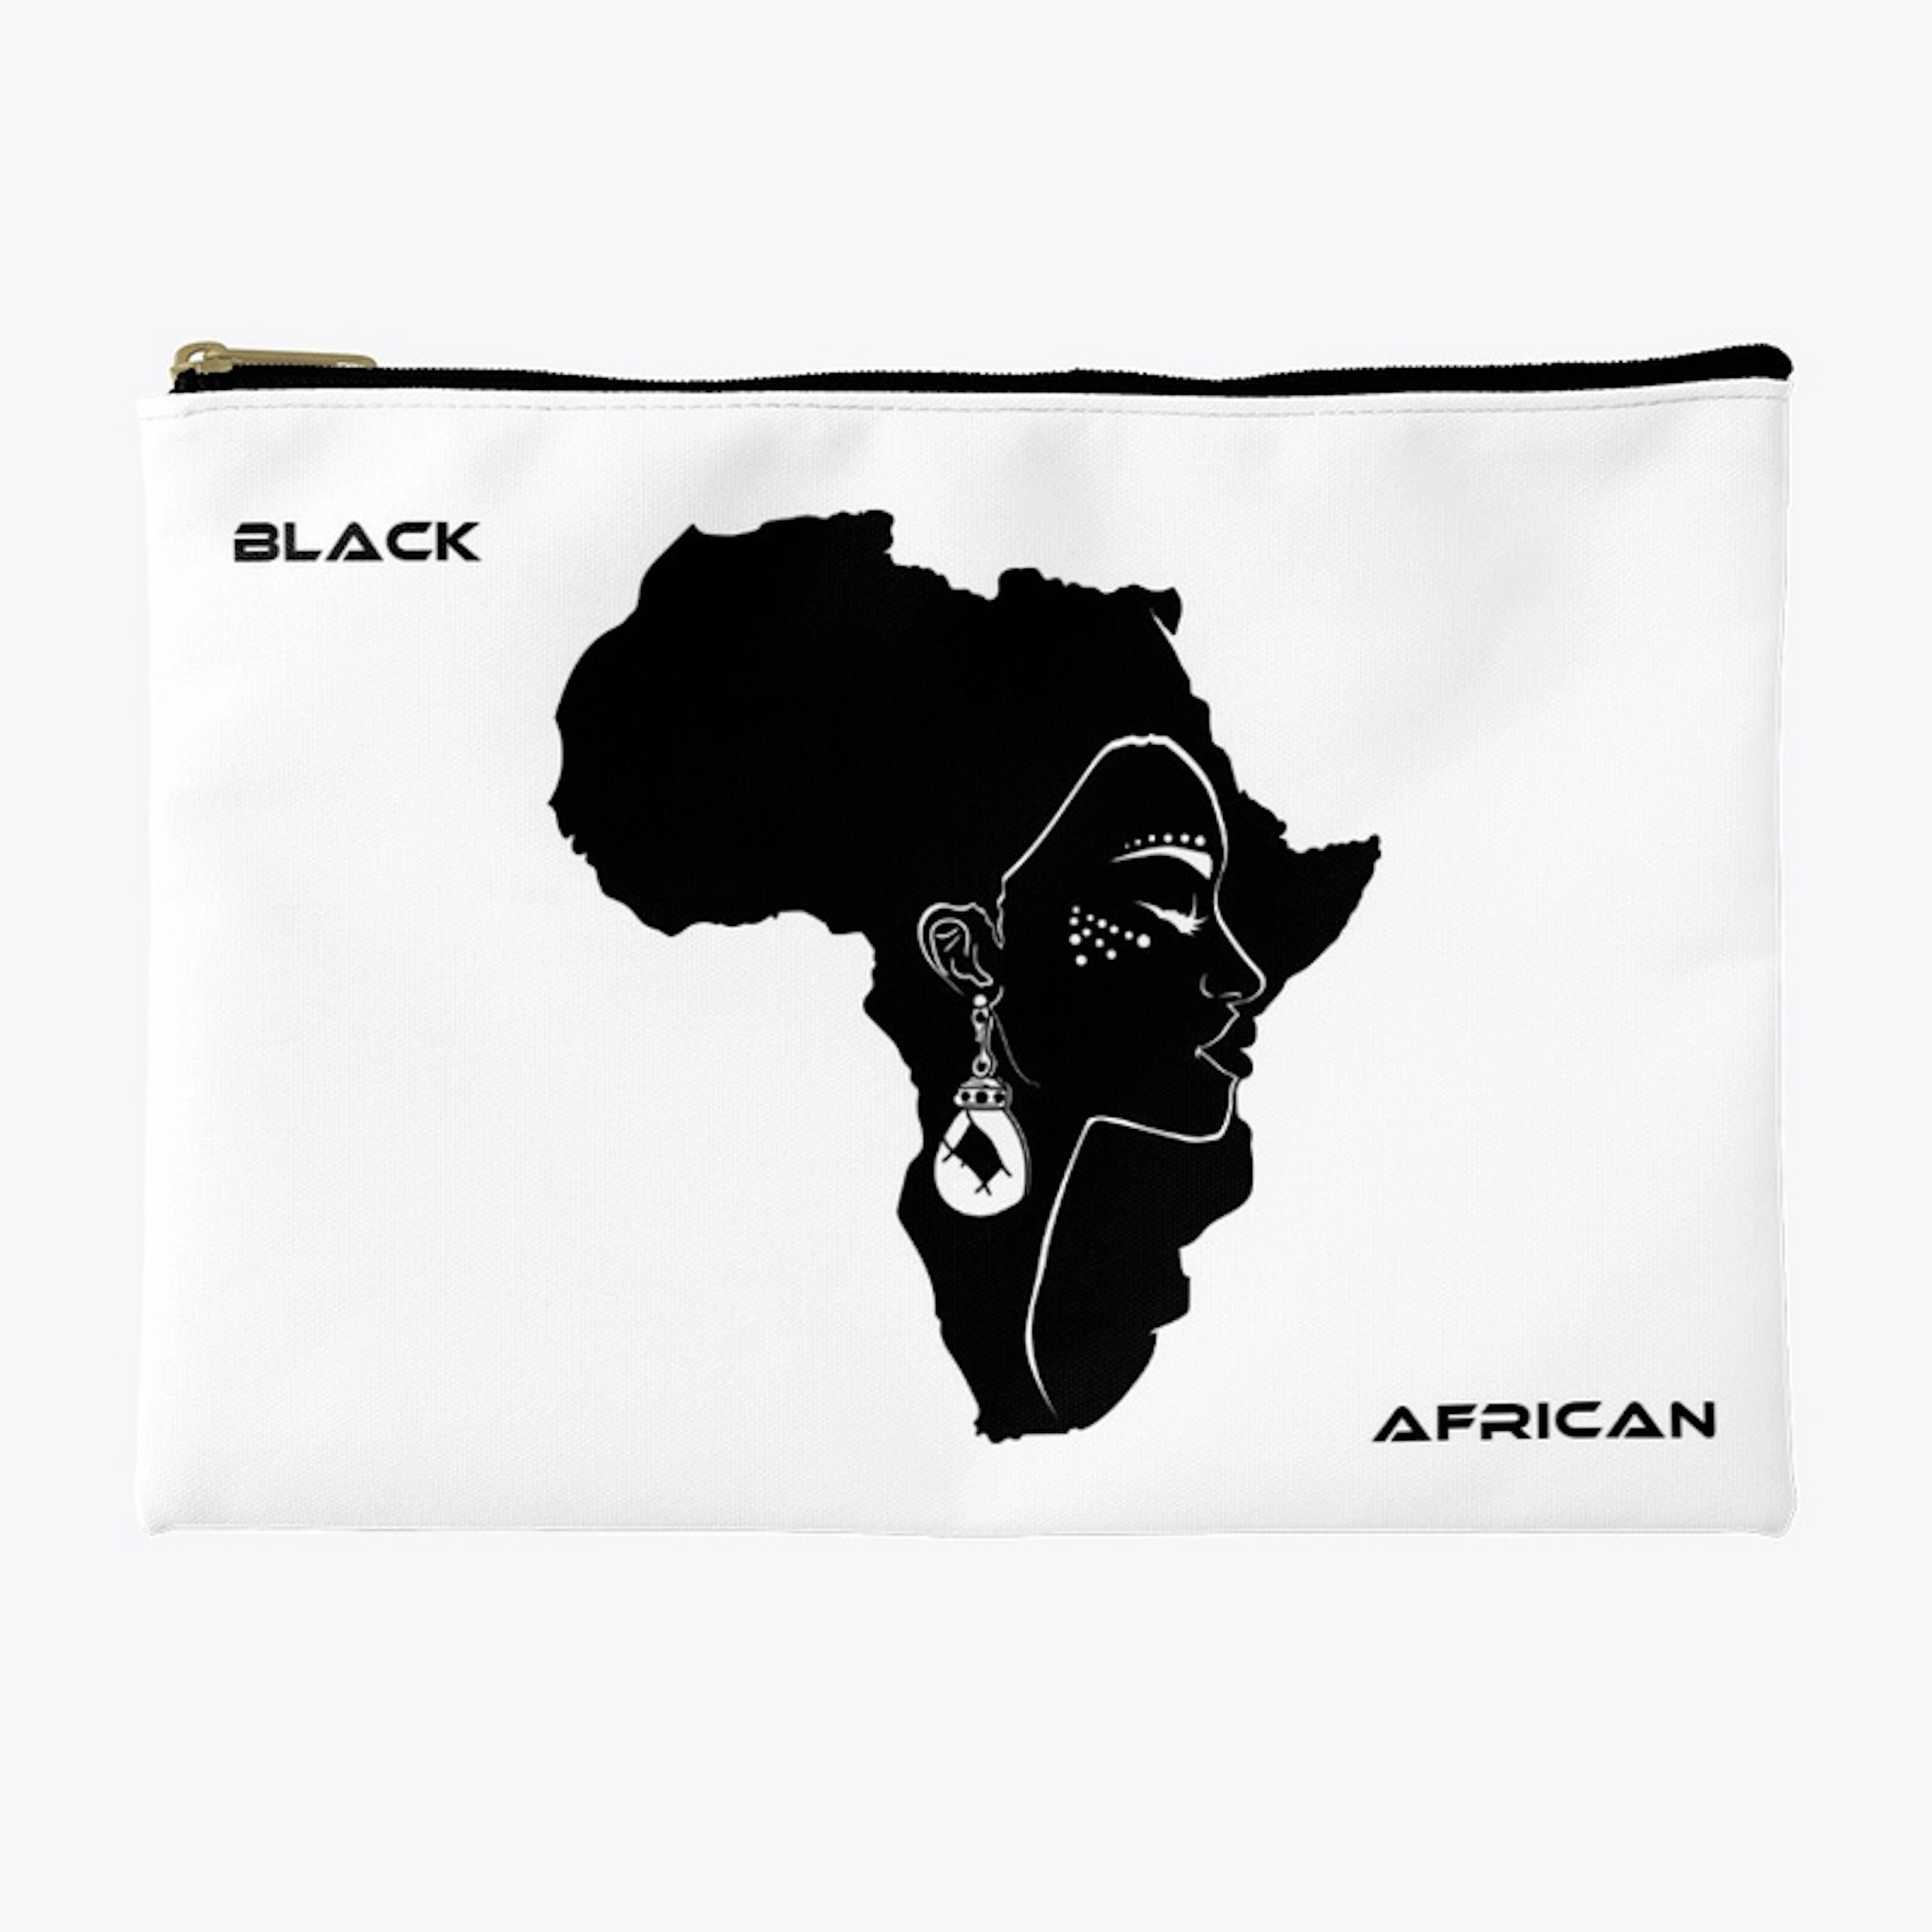 Black - African